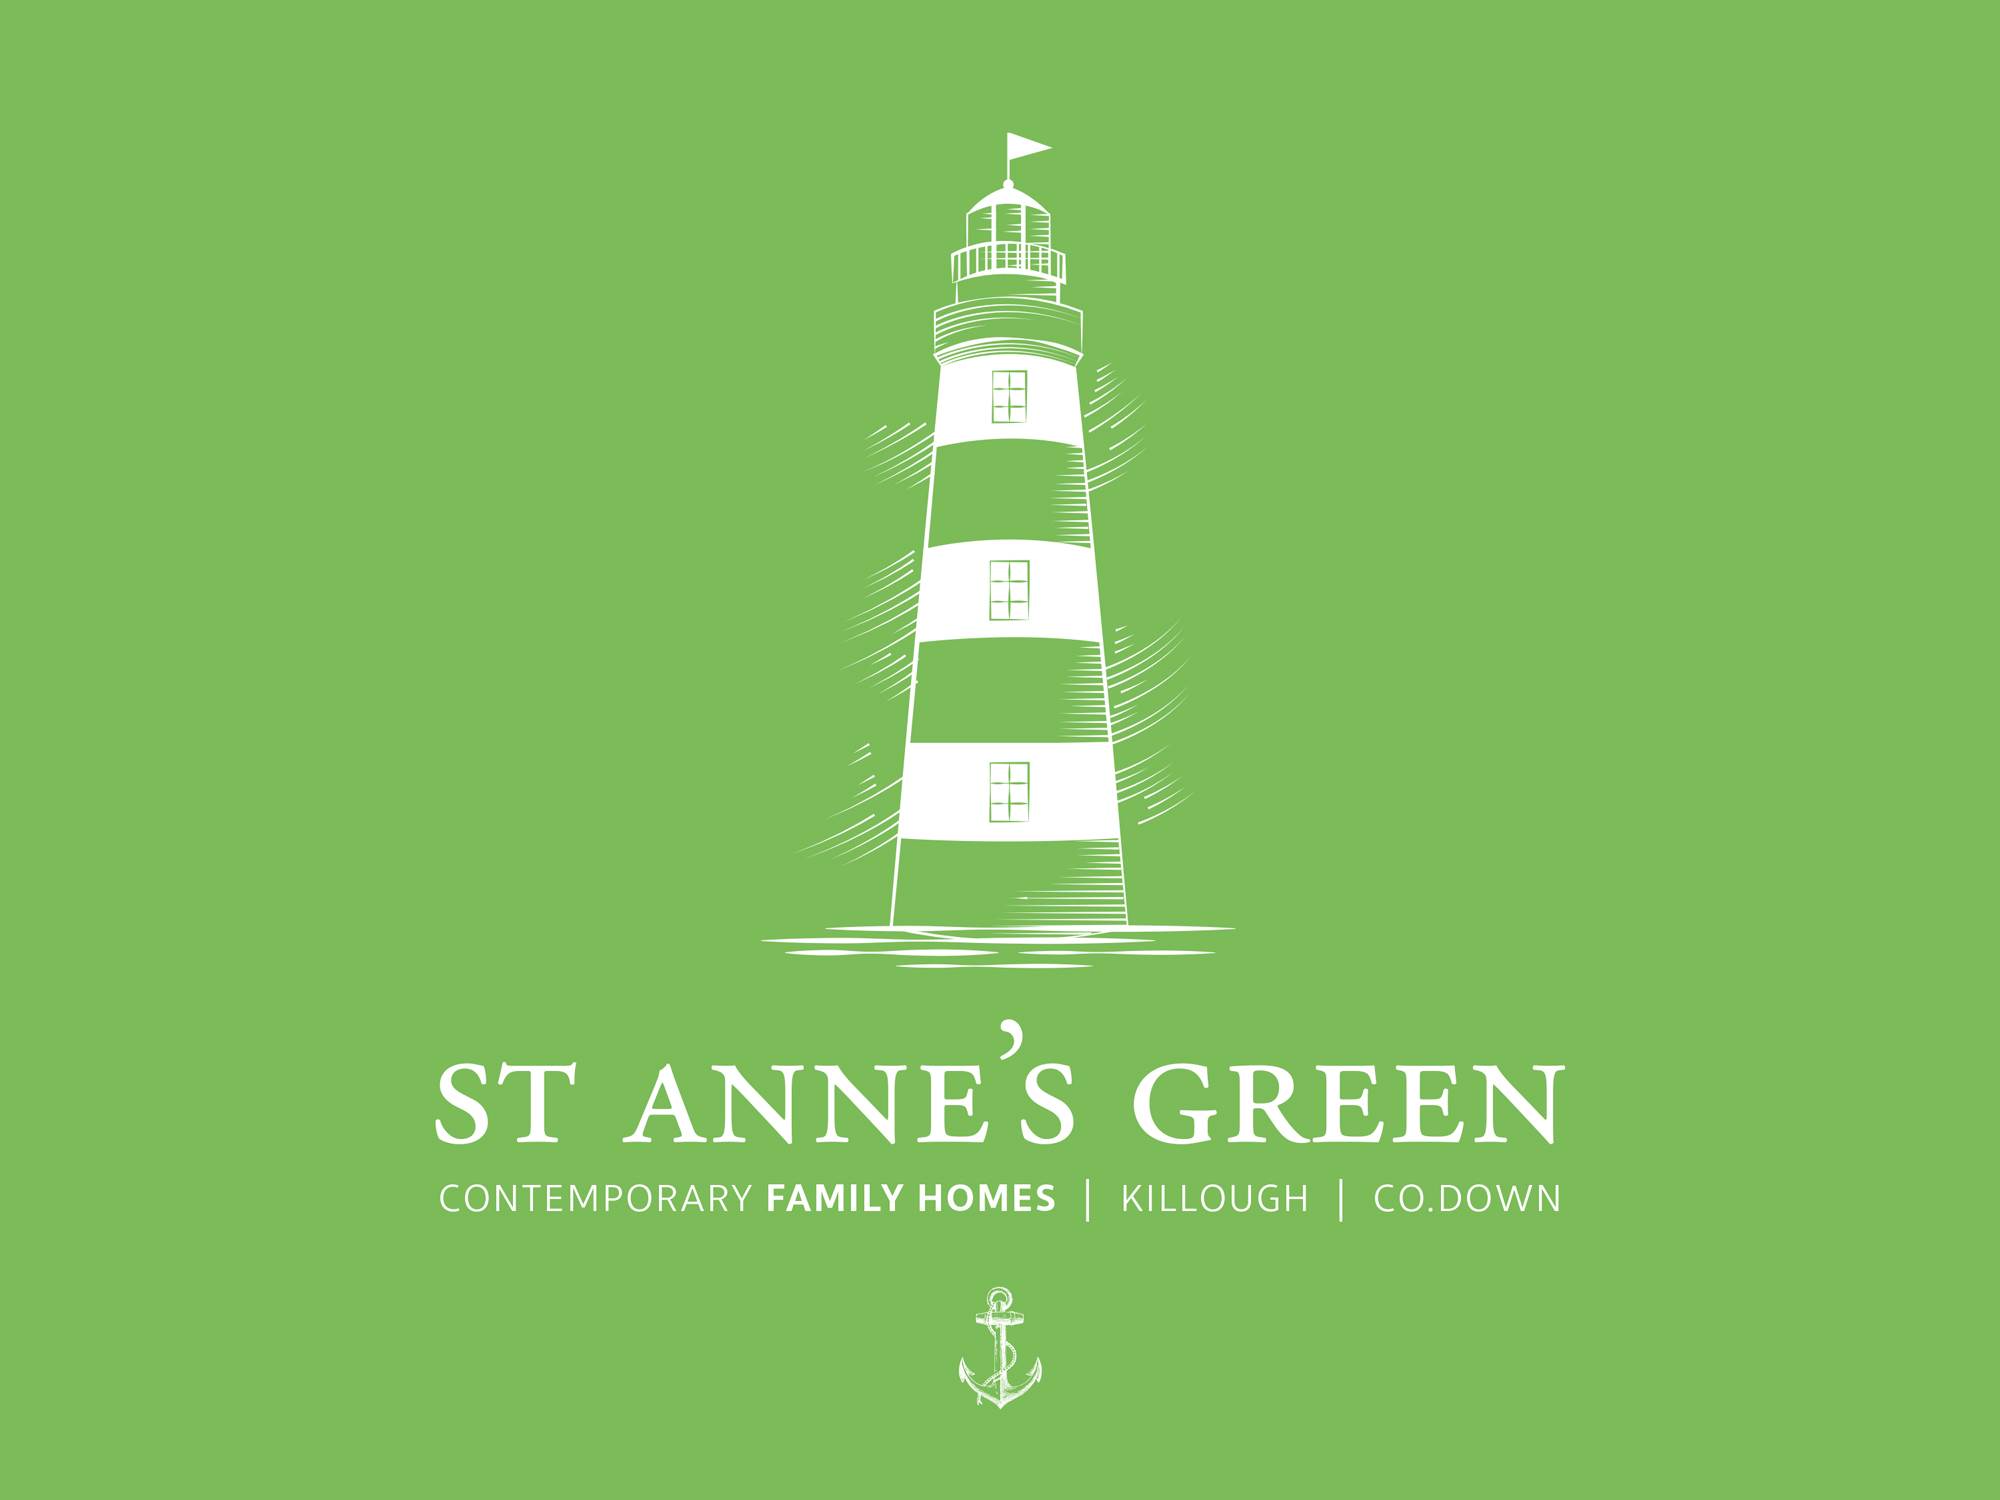 3 St Anne's Green